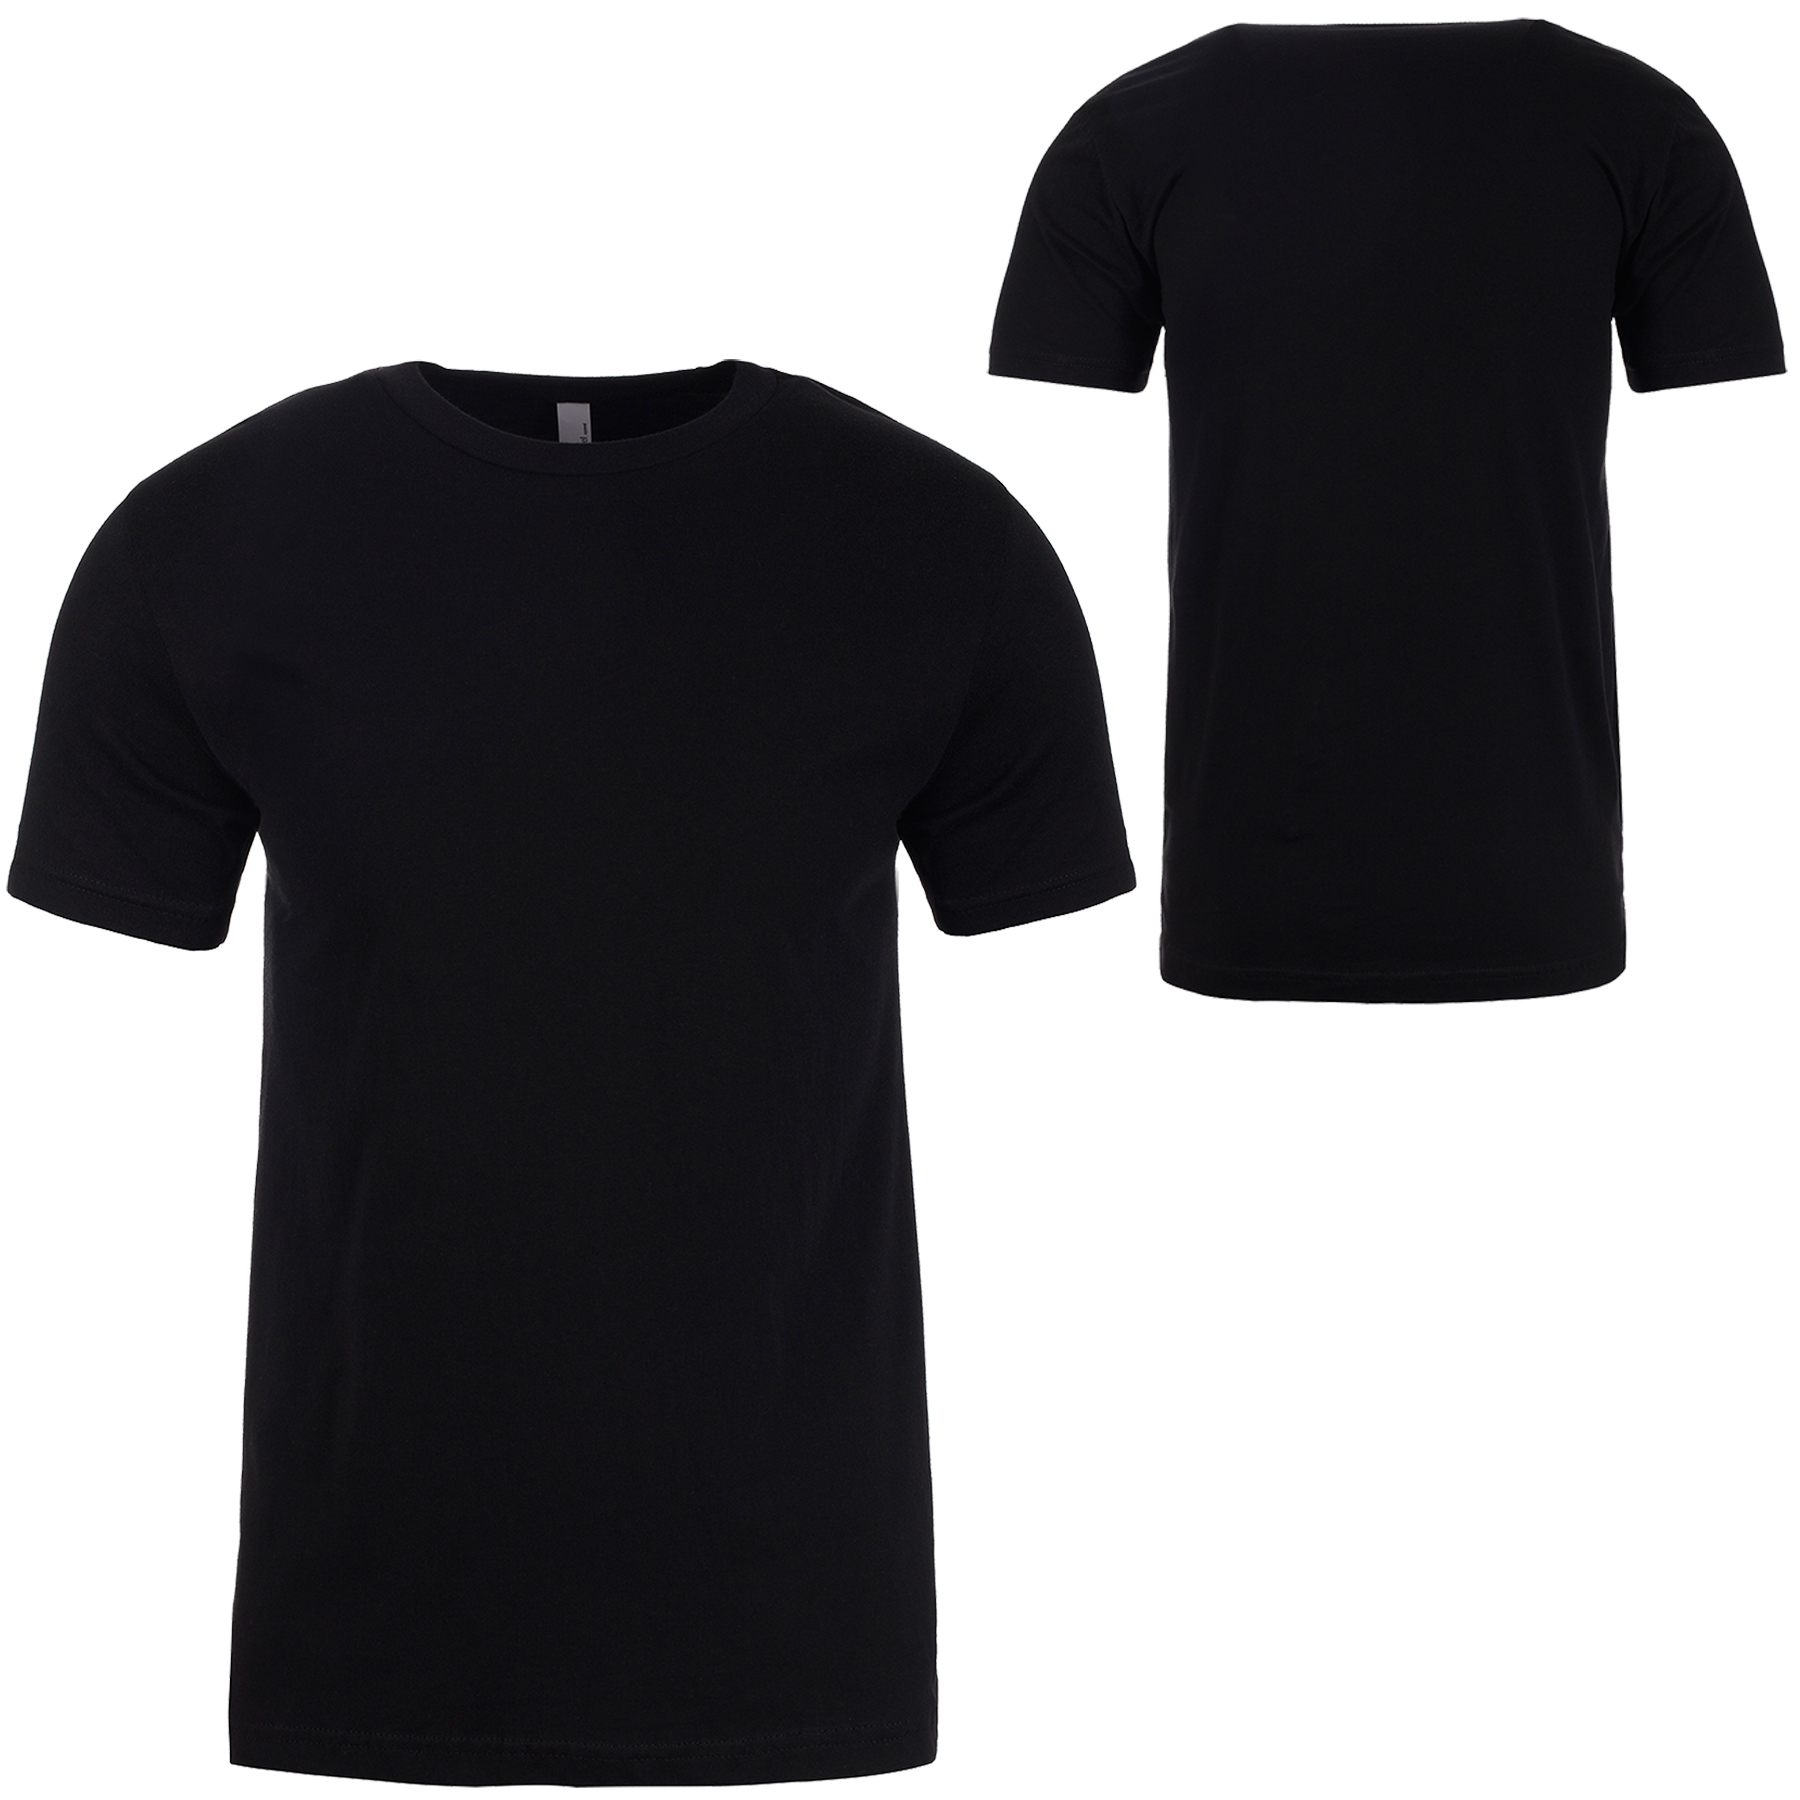 Next Level™ Premium Fitted Adult Tshirt - 4.3 oz